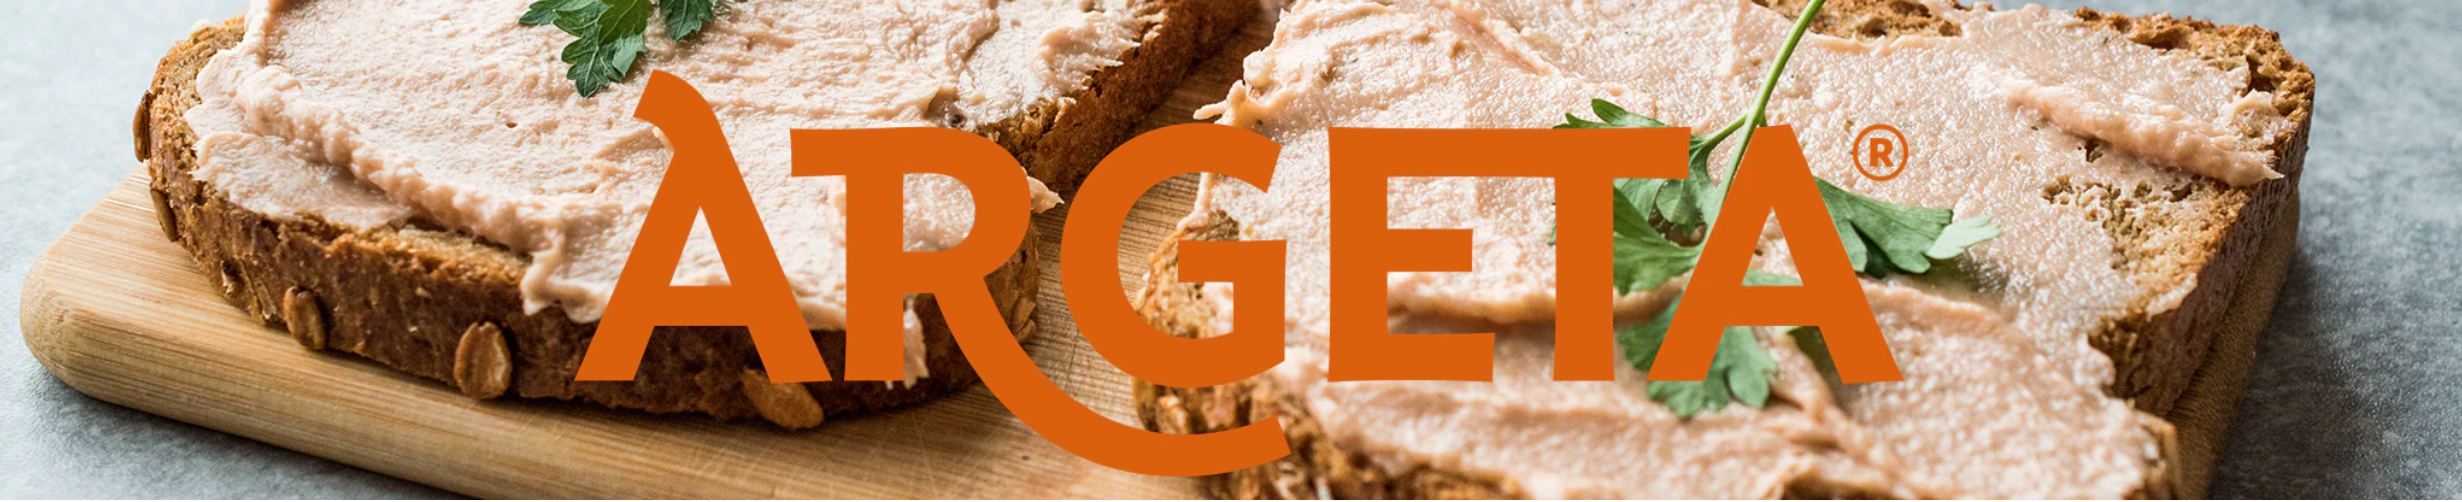 Argeta Pate - Global Imports and Exports Wholesale European Food Distributors